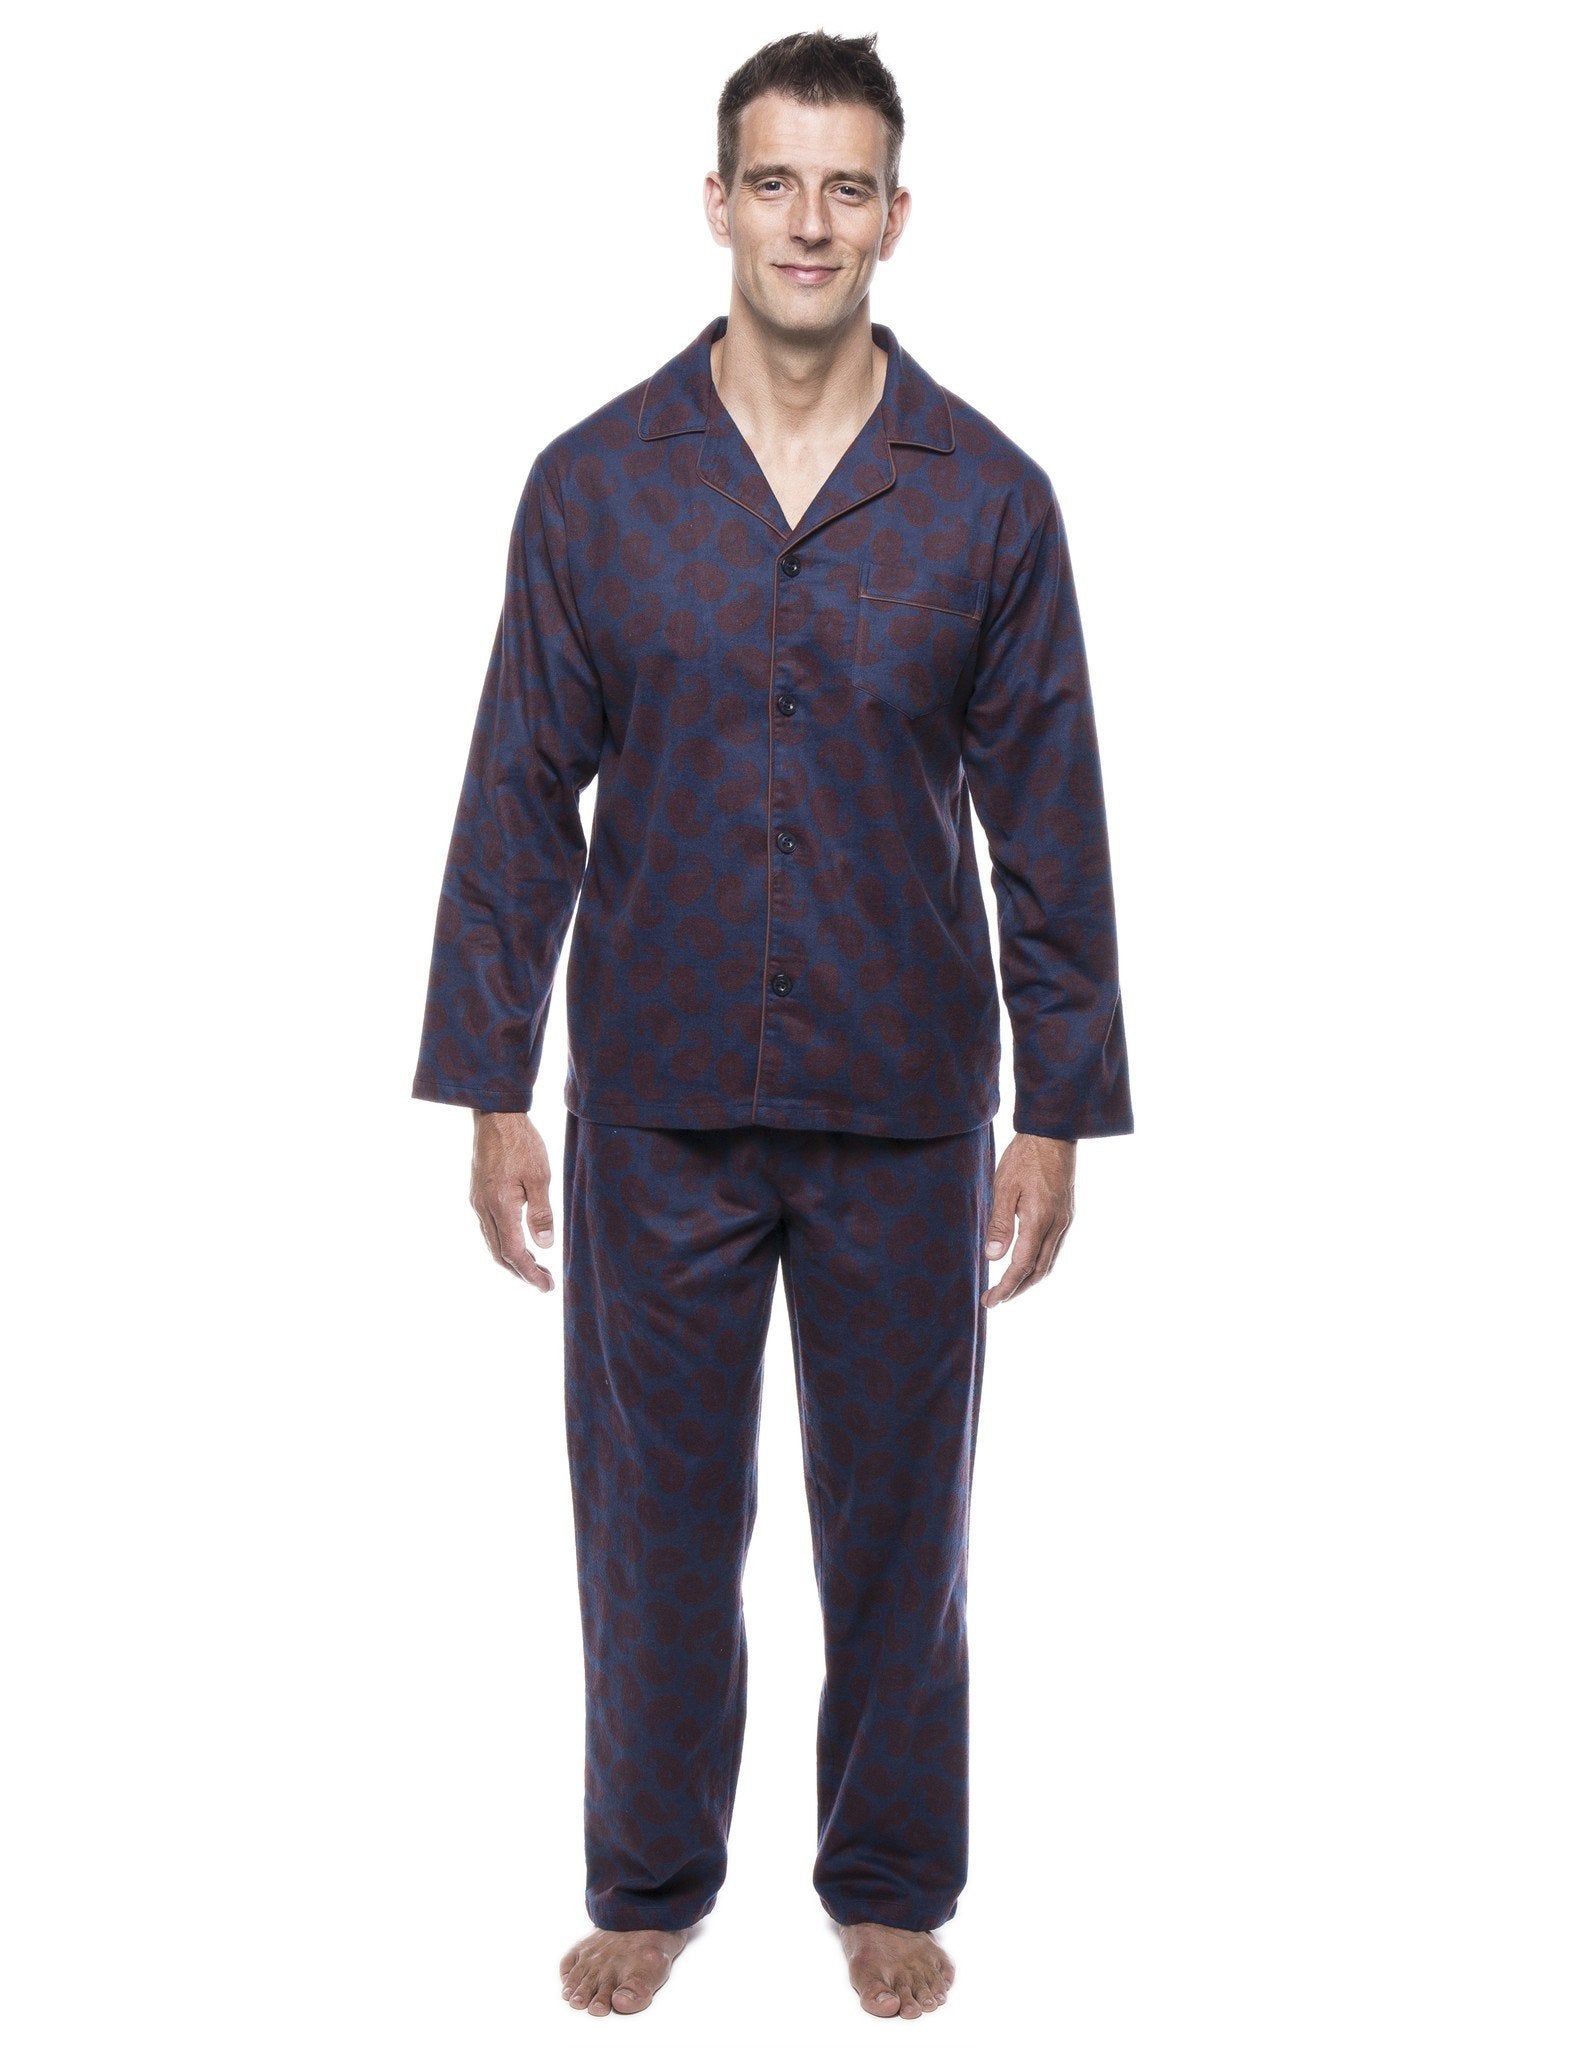 Men's 100% Cotton Flannel Pajama Set - Paisley Navy/Brown